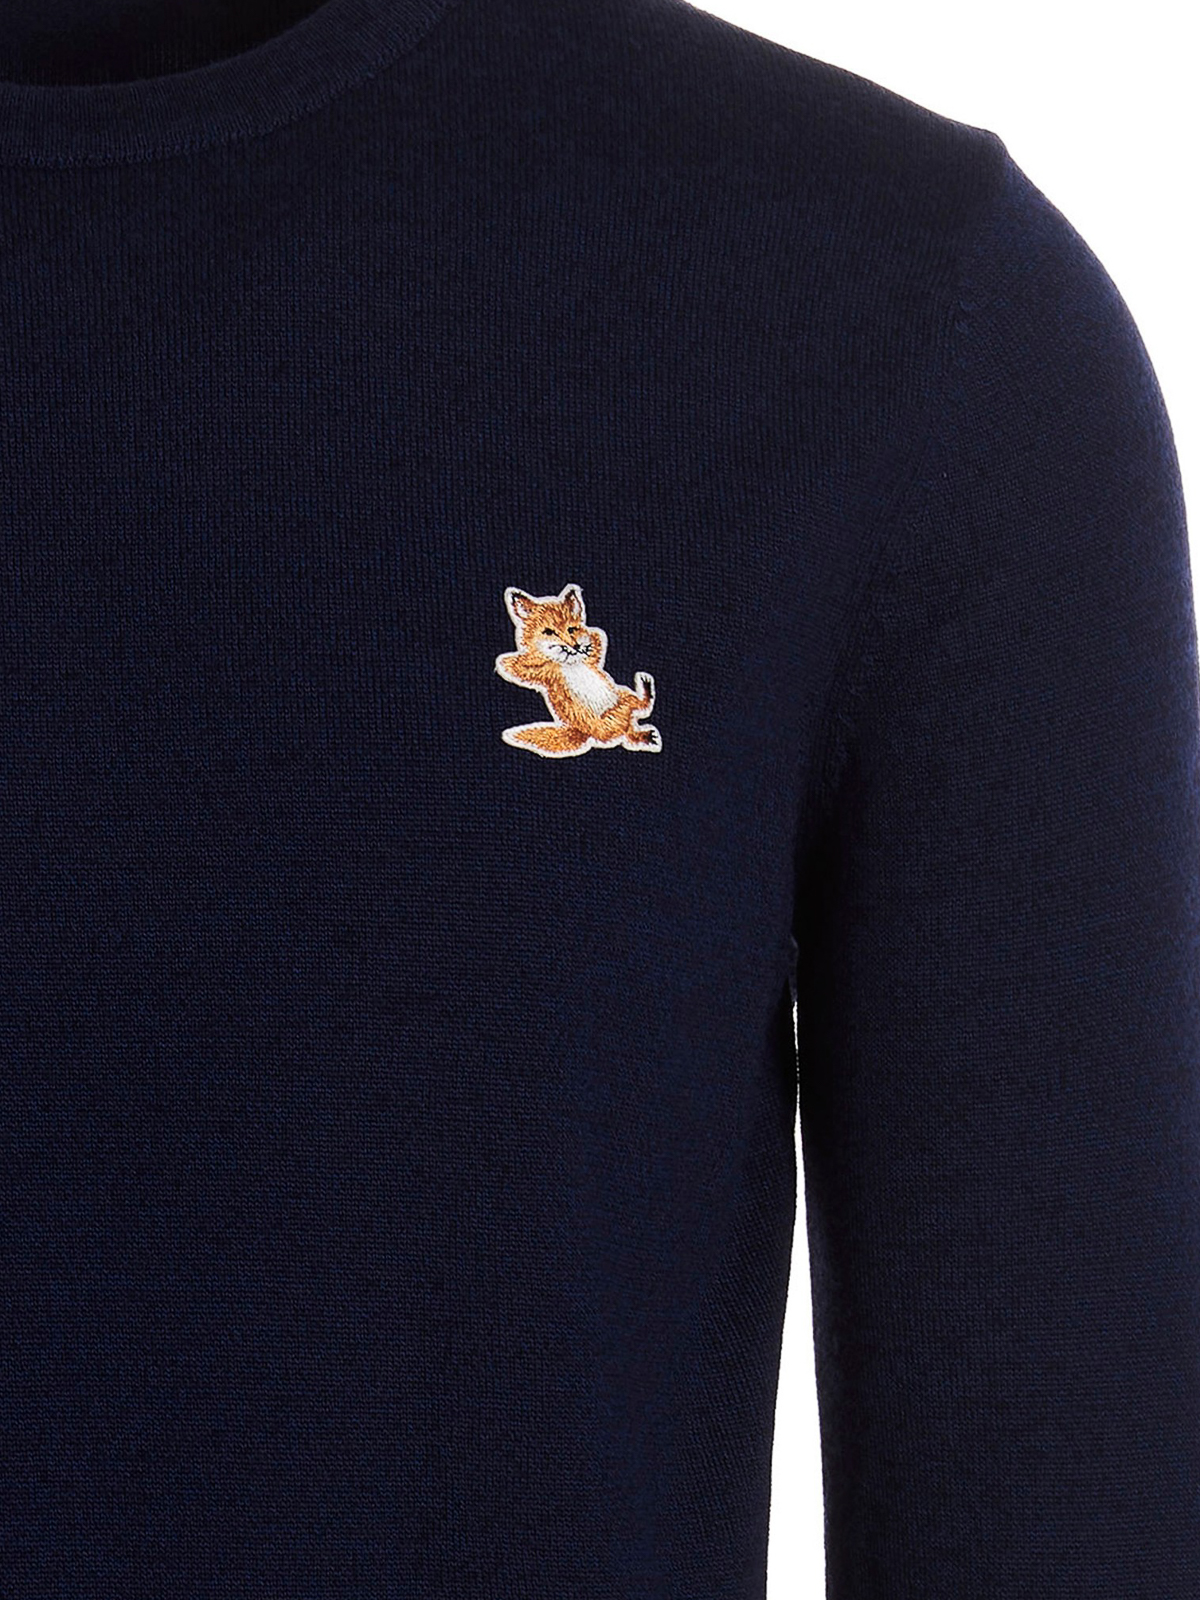 Crew necks Maison Kitsuné - Chillax fox sweater - KM00501KT1036H481